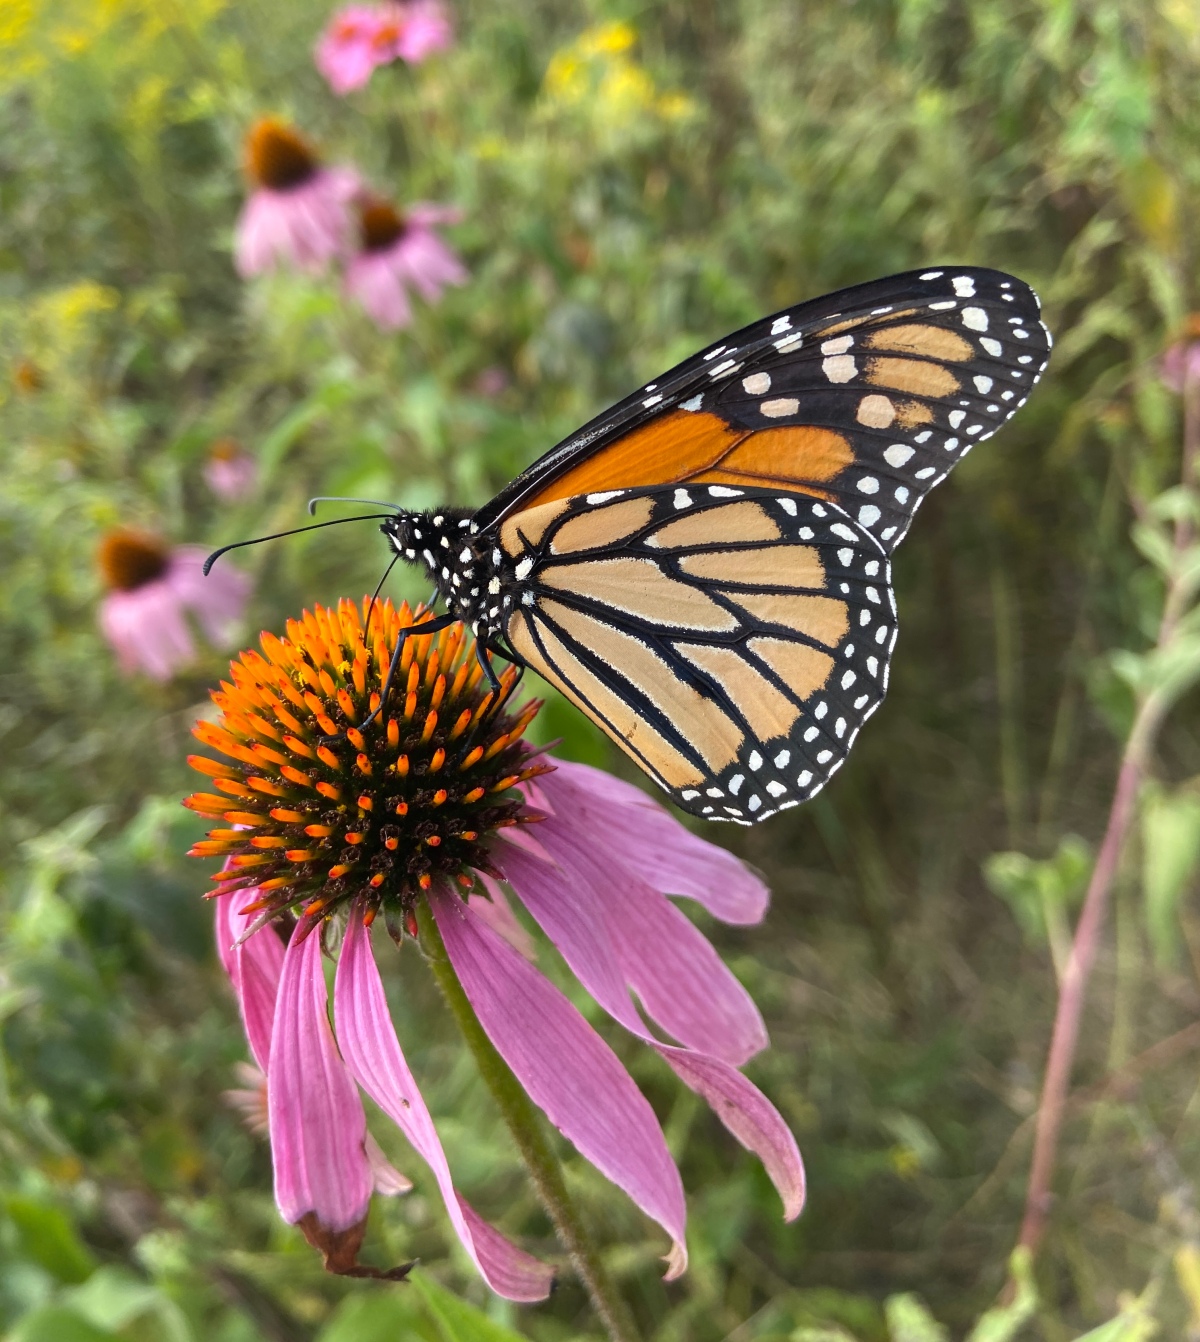 How to help monarch butterflies